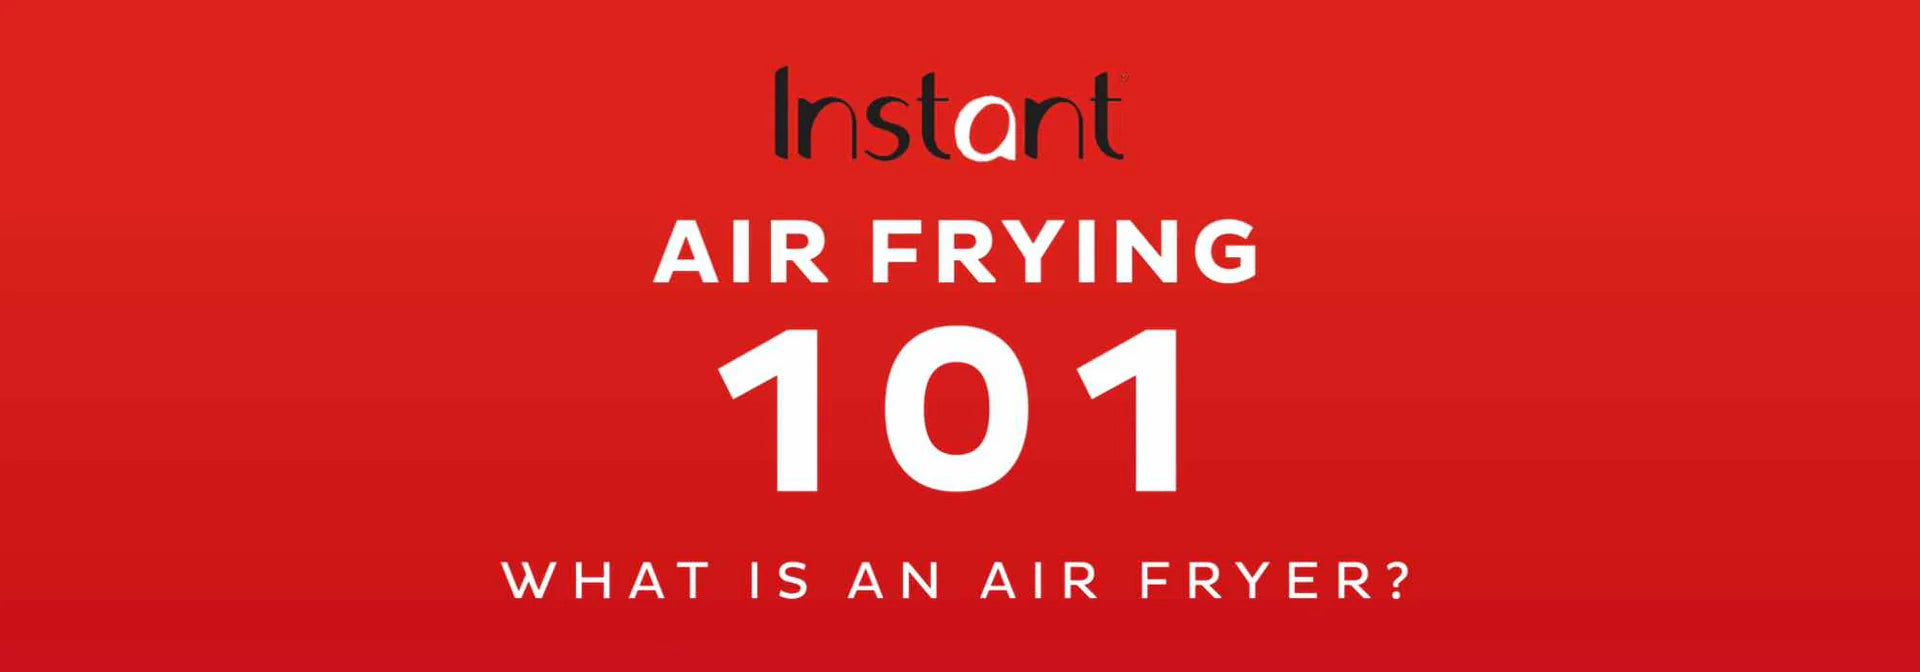 Air frying 101: What is an air fryer?